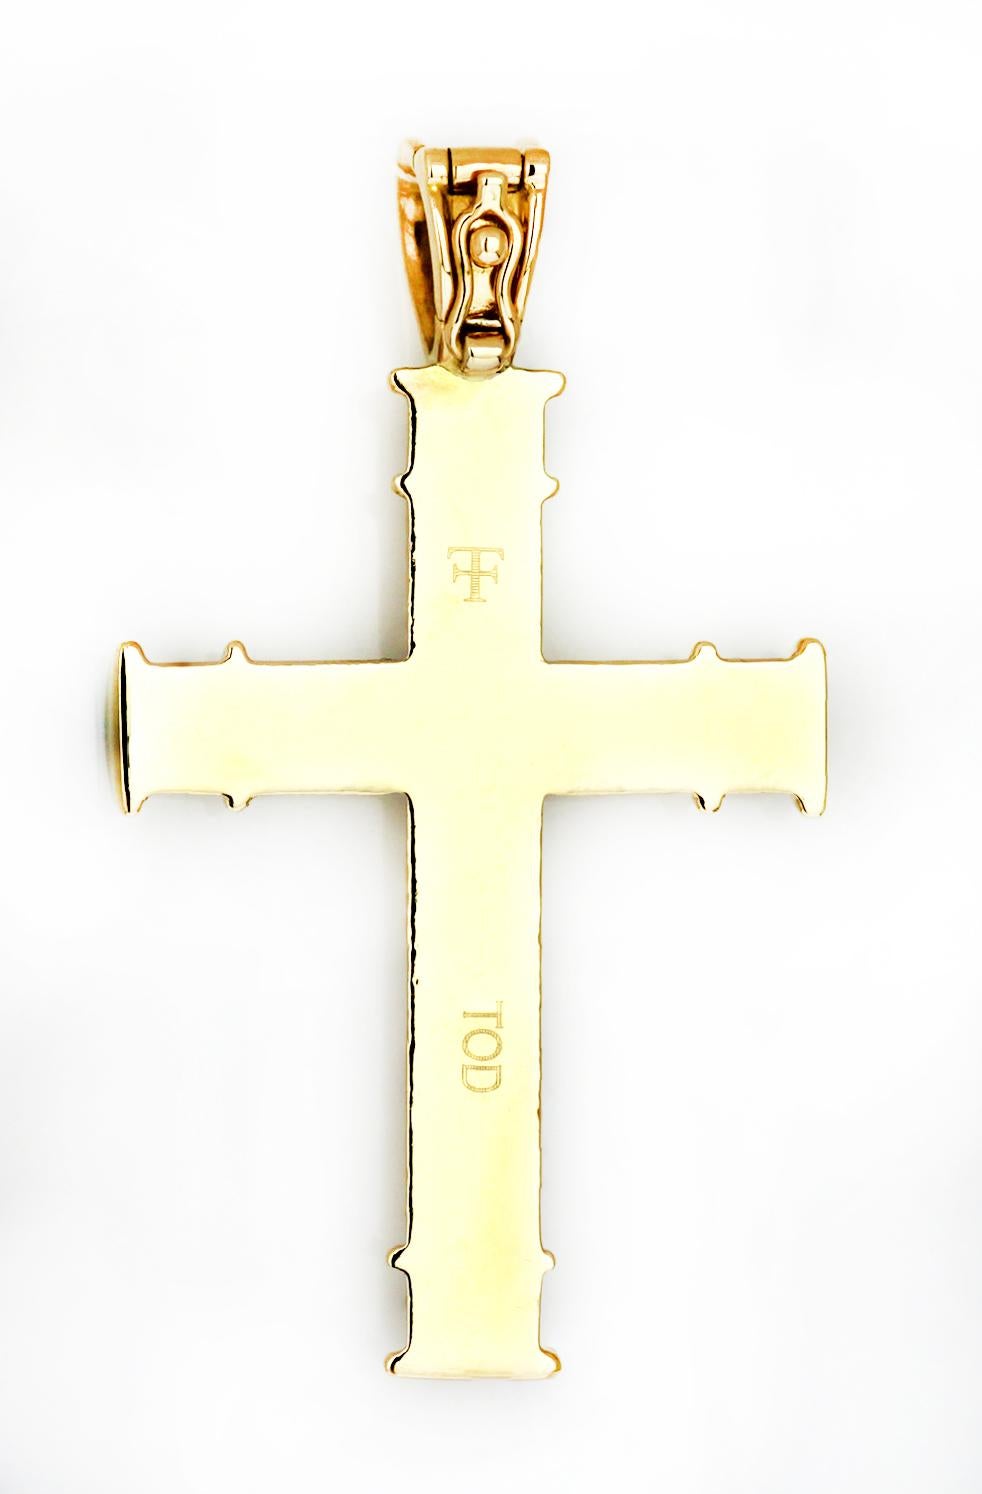 Modern Theo Fennell 18 Carat Yellow Gold Cross Pendant, British Designer